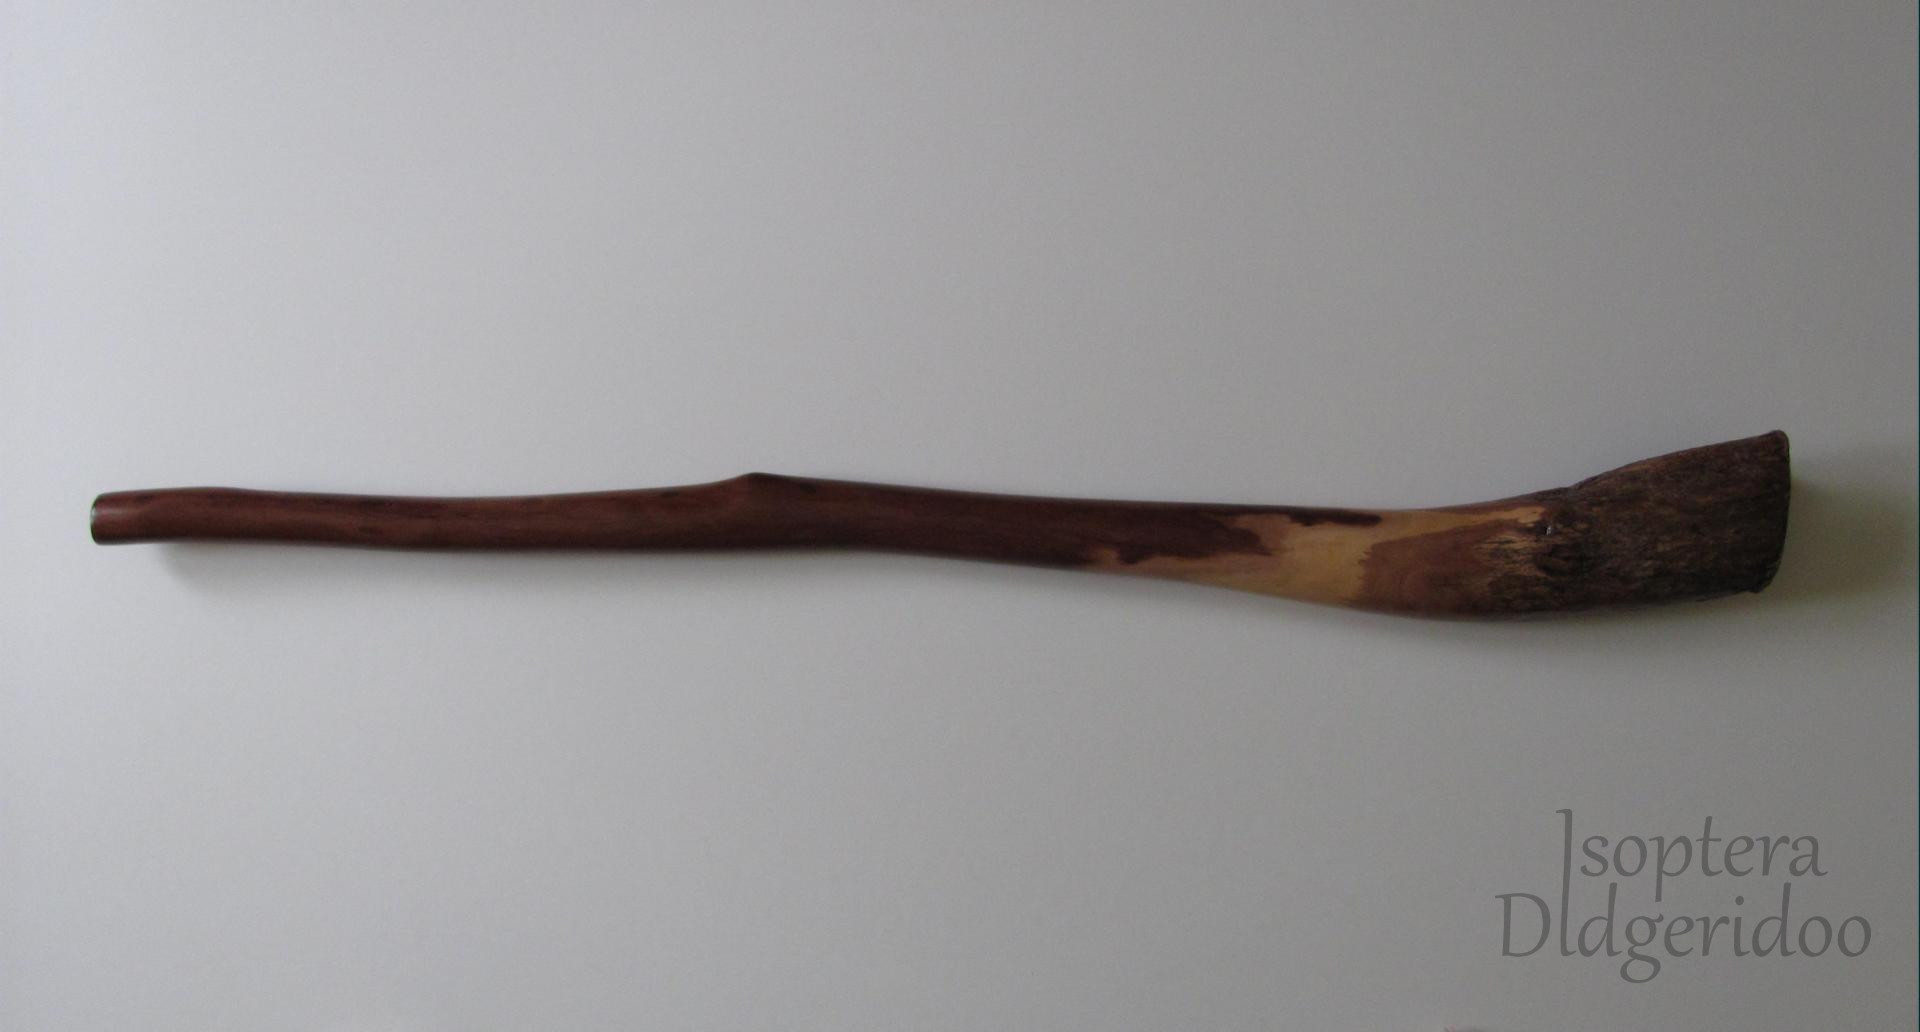 Boxwood Eucalyptus didgeridoo ID-01A